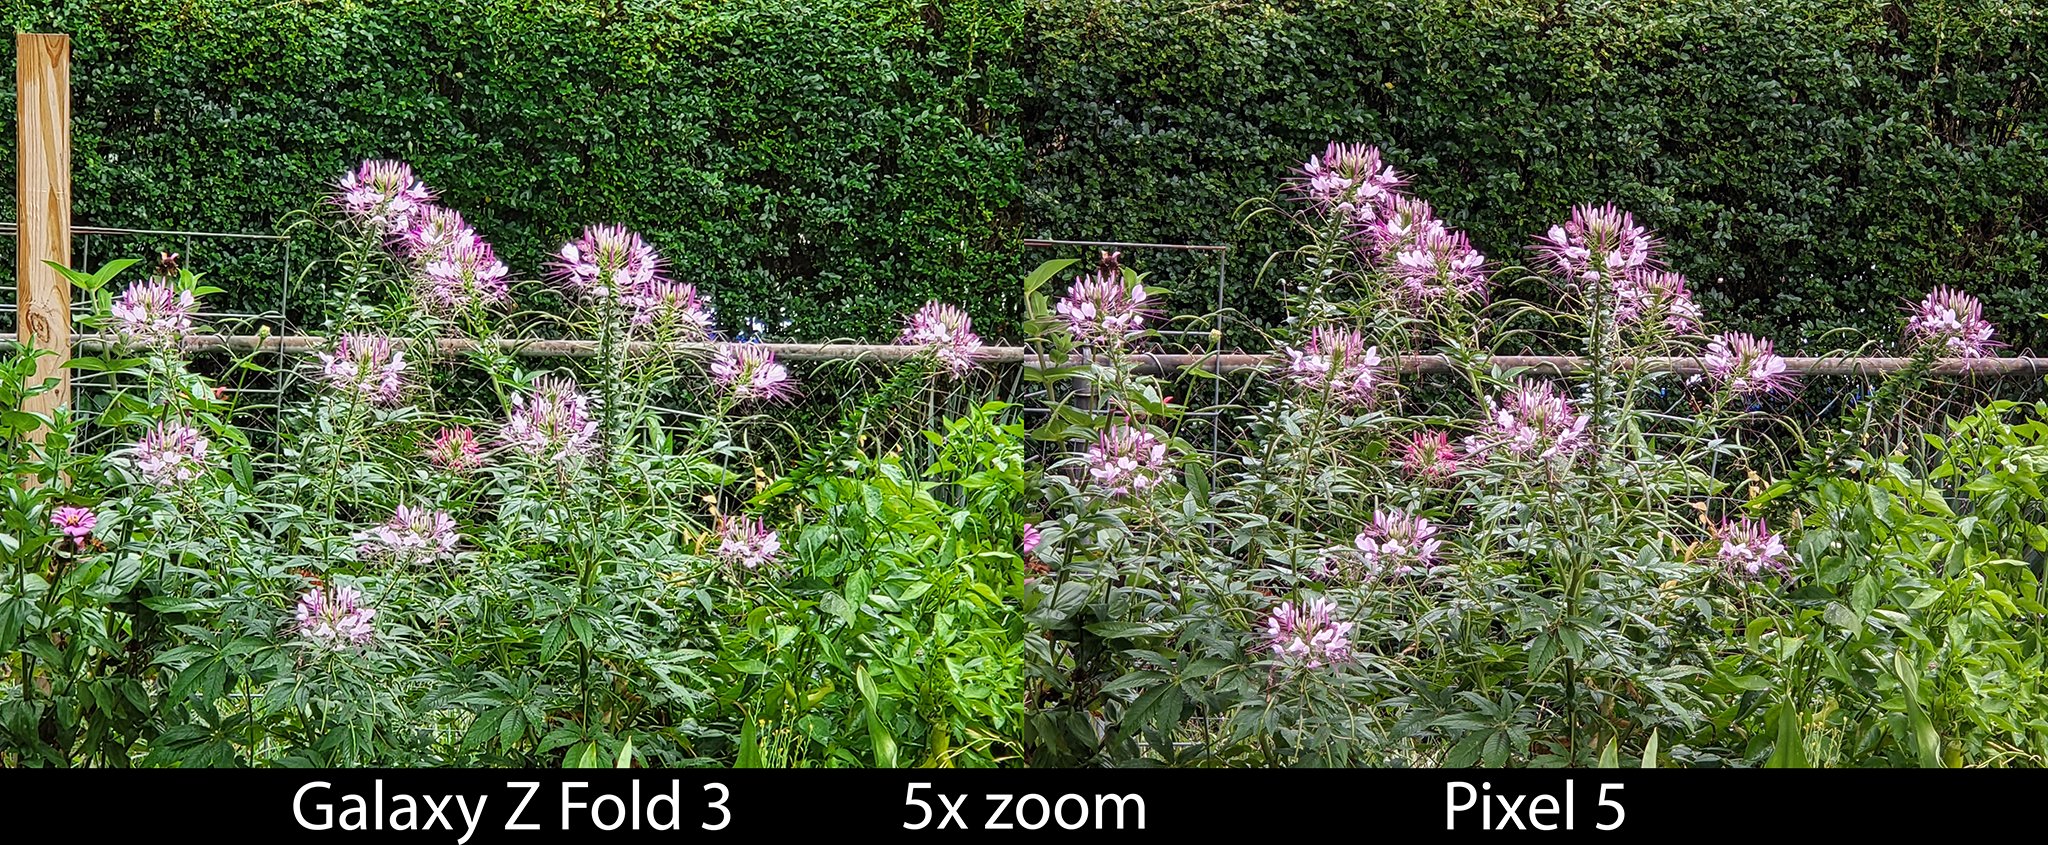 Camera Compare Z Fold 3 Pixel 5 Zoom